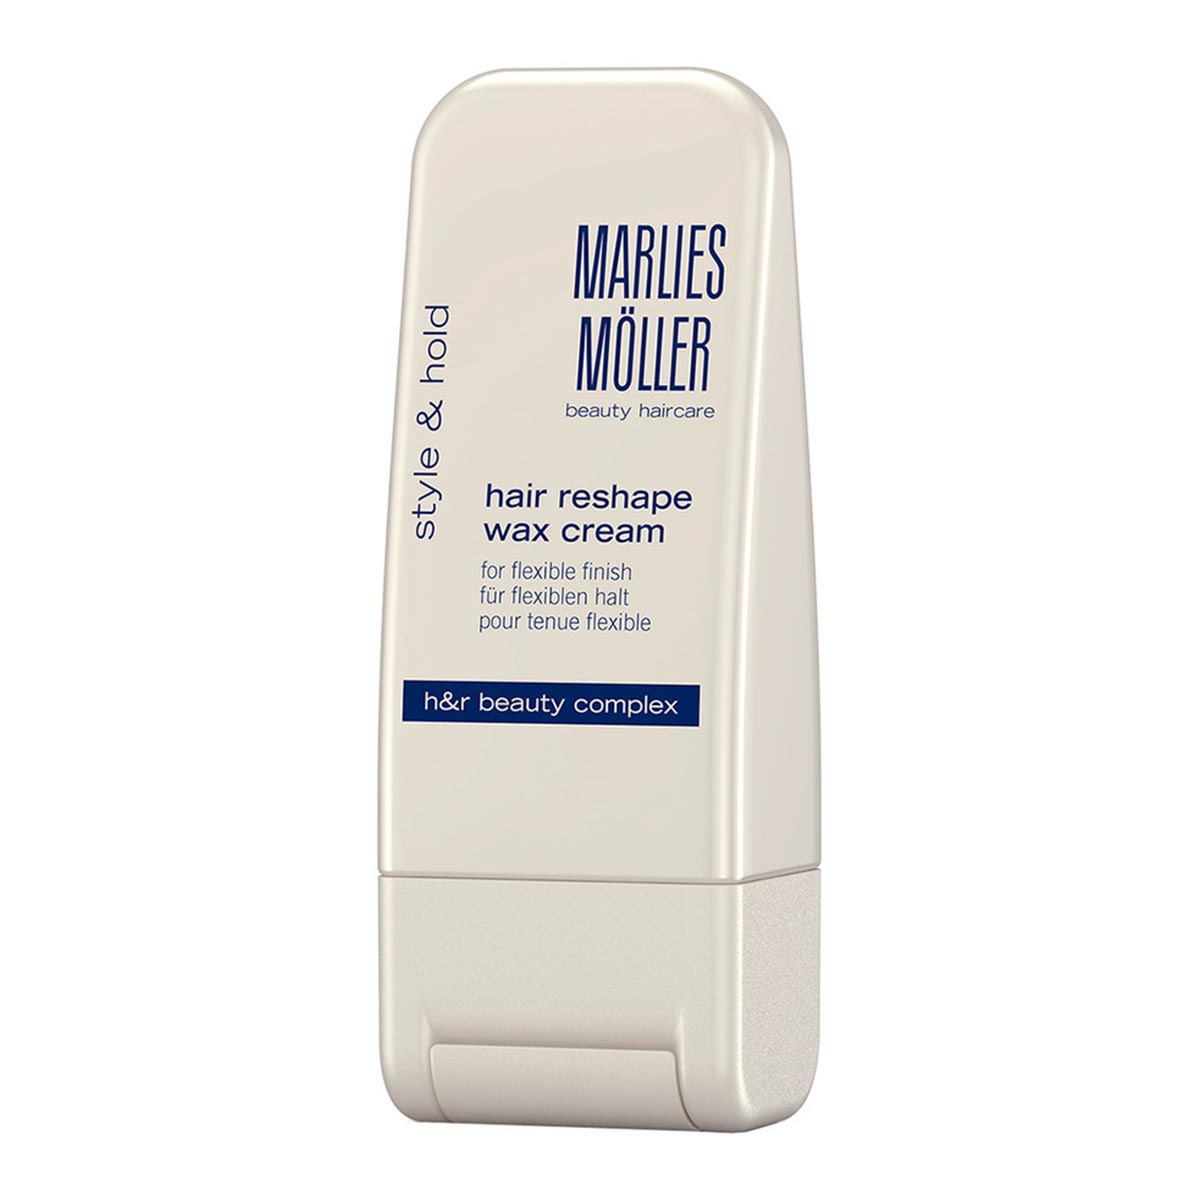 Image of Marlies Möller Hair Reshape Wax Cream 100ml